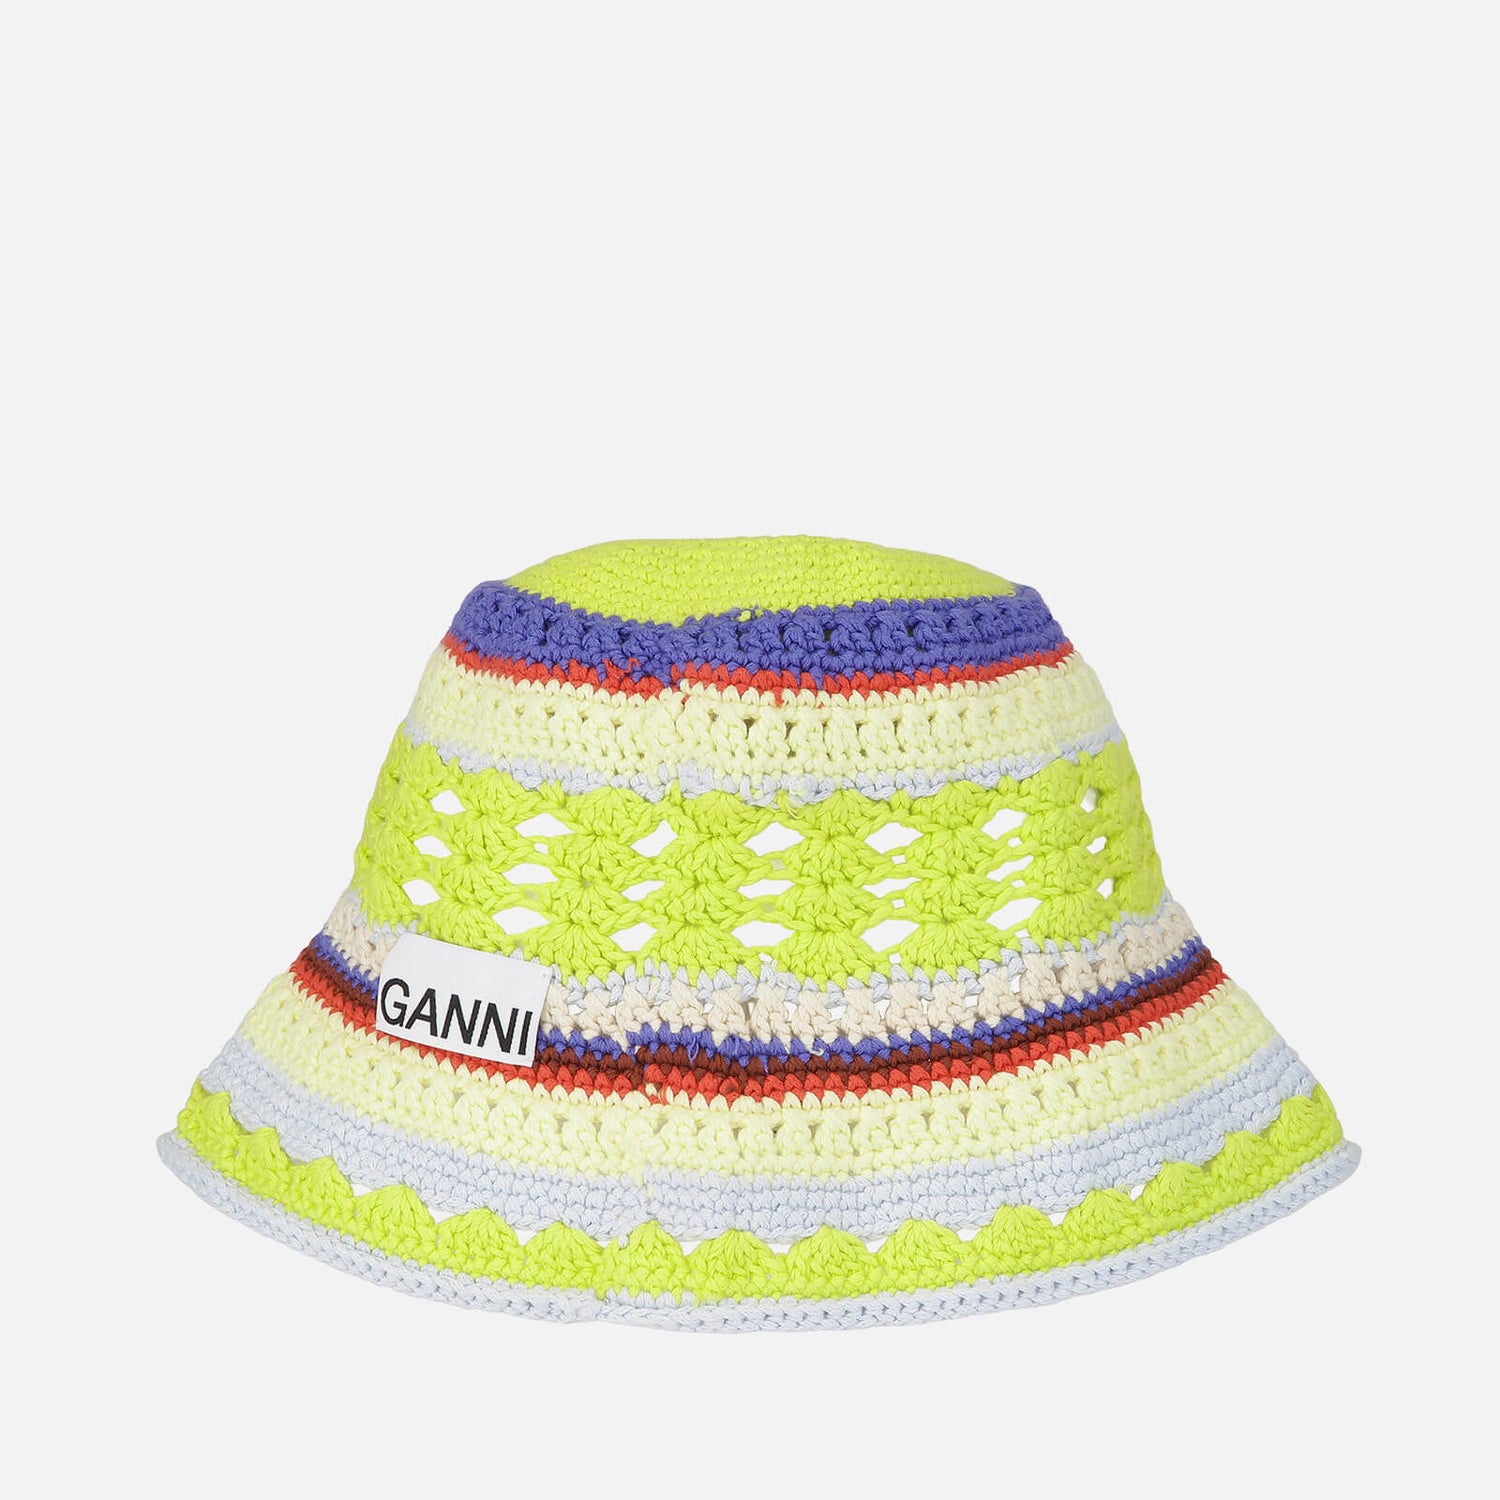 Ganni Women's Crochet Hat - Heather